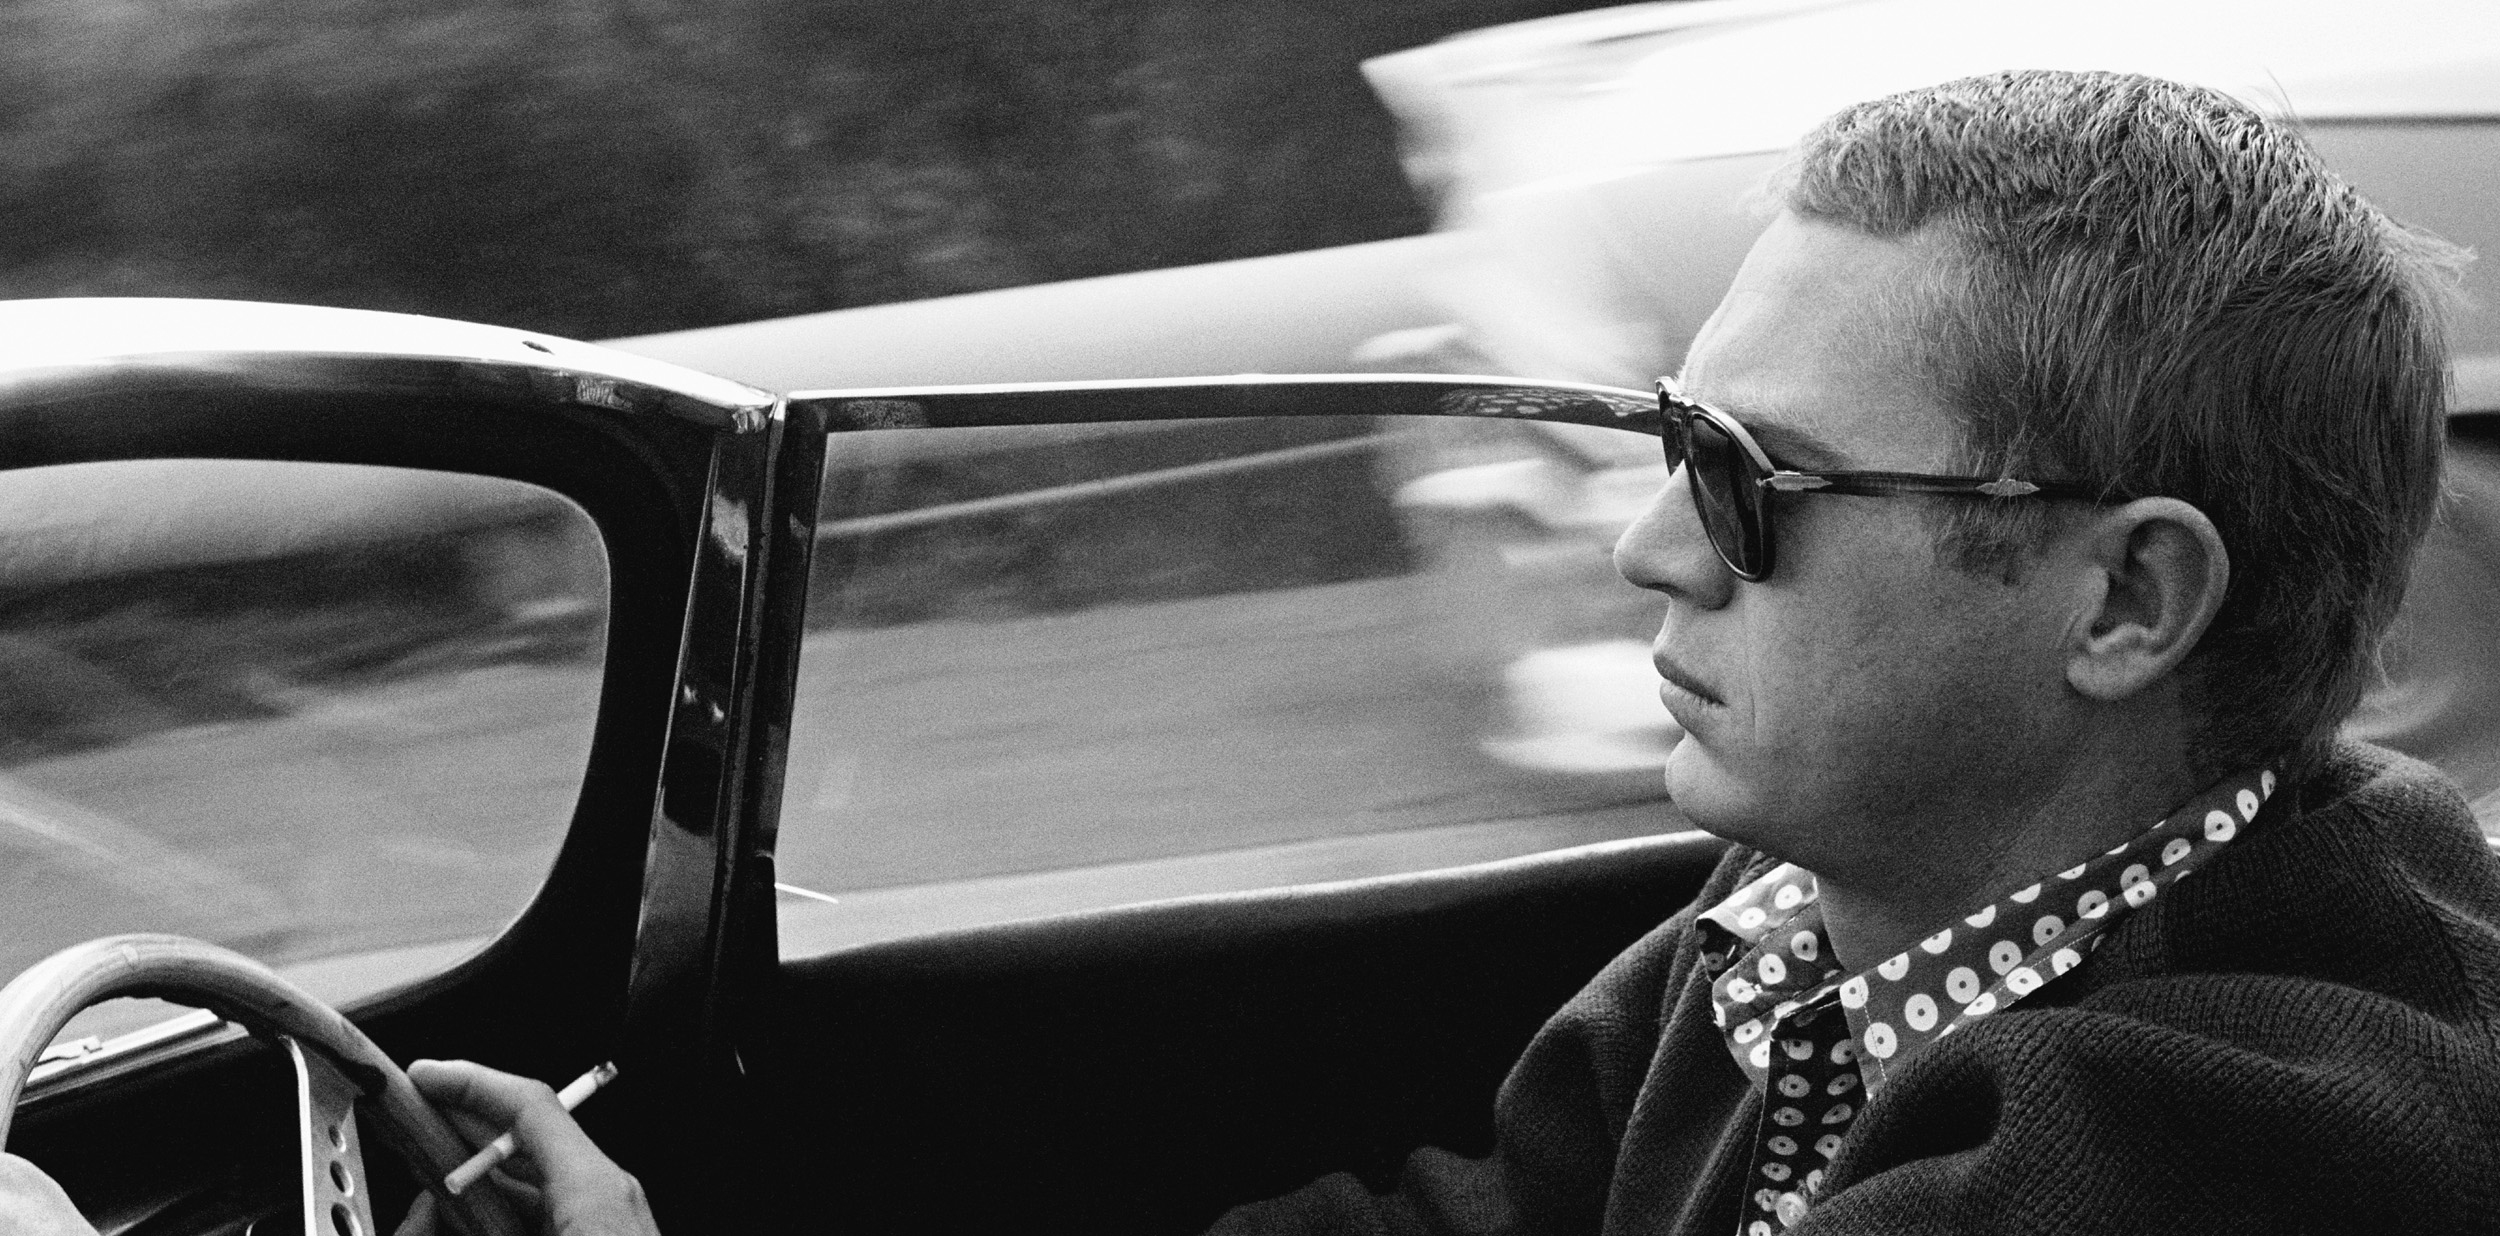 Steve McQueen traveling down Nichols Canyon in his 1957 Jaguar XKSS, 1960.